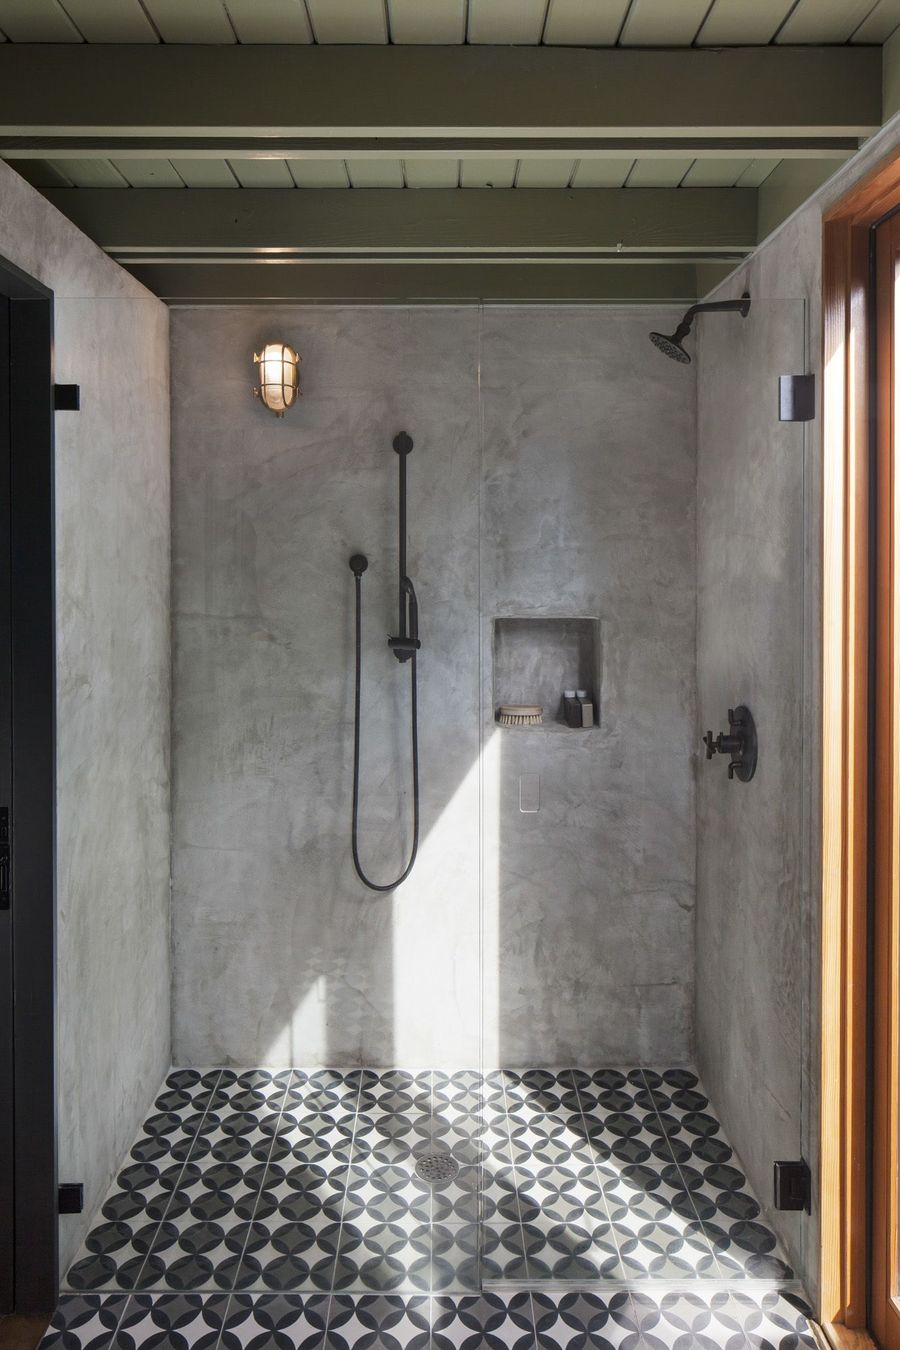 Concrete Shower Walls in Industrial Bathroom via ElleDecor